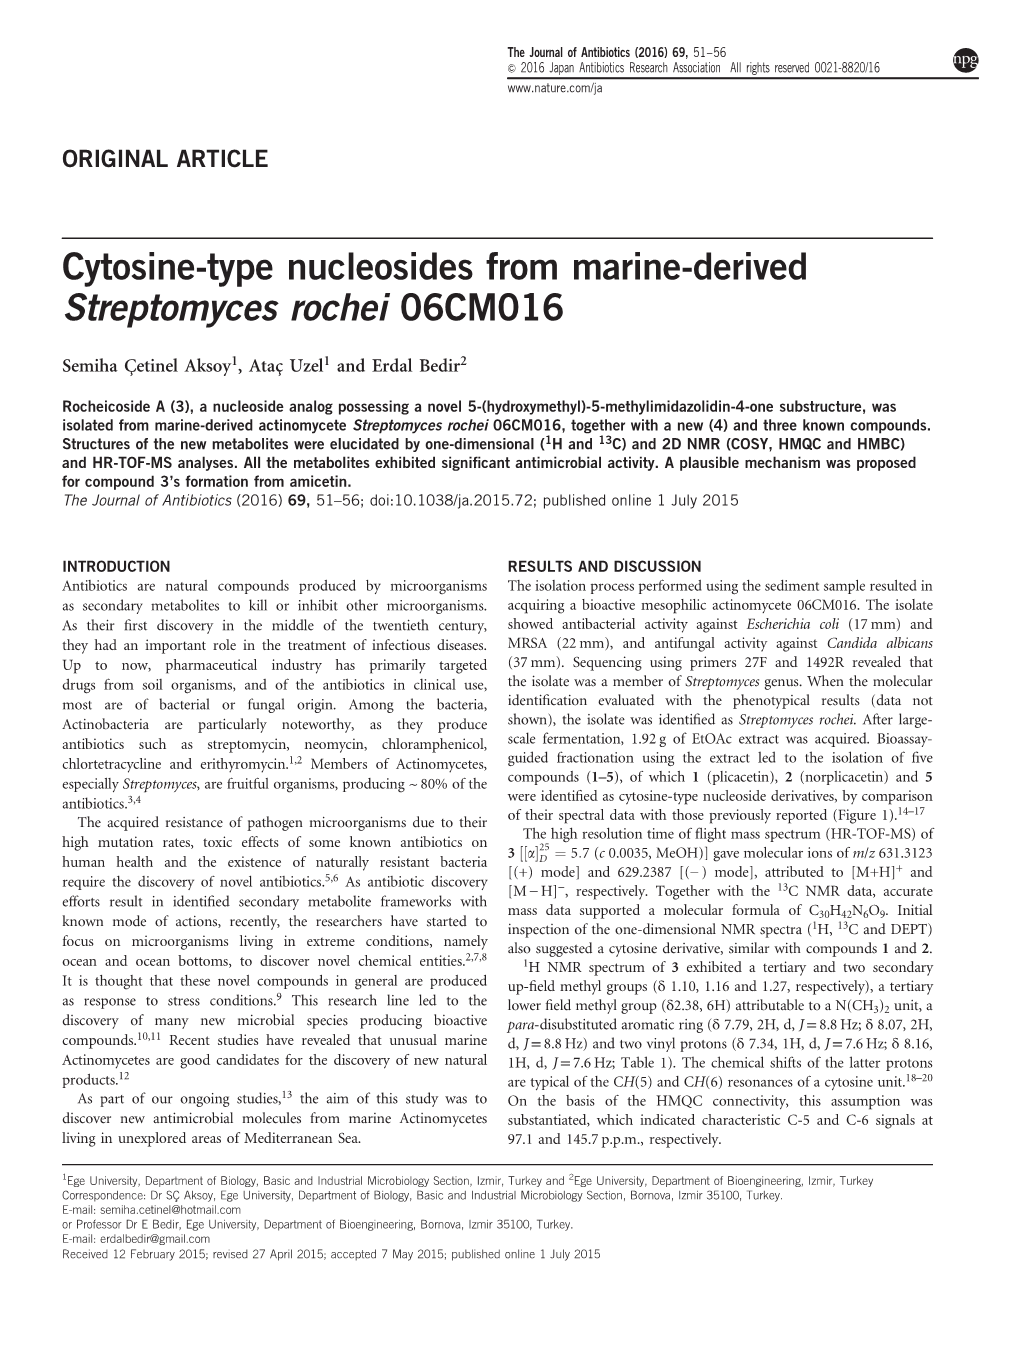 Cytosine-Type Nucleosides from Marine-Derived Streptomyces Rochei 06CM016